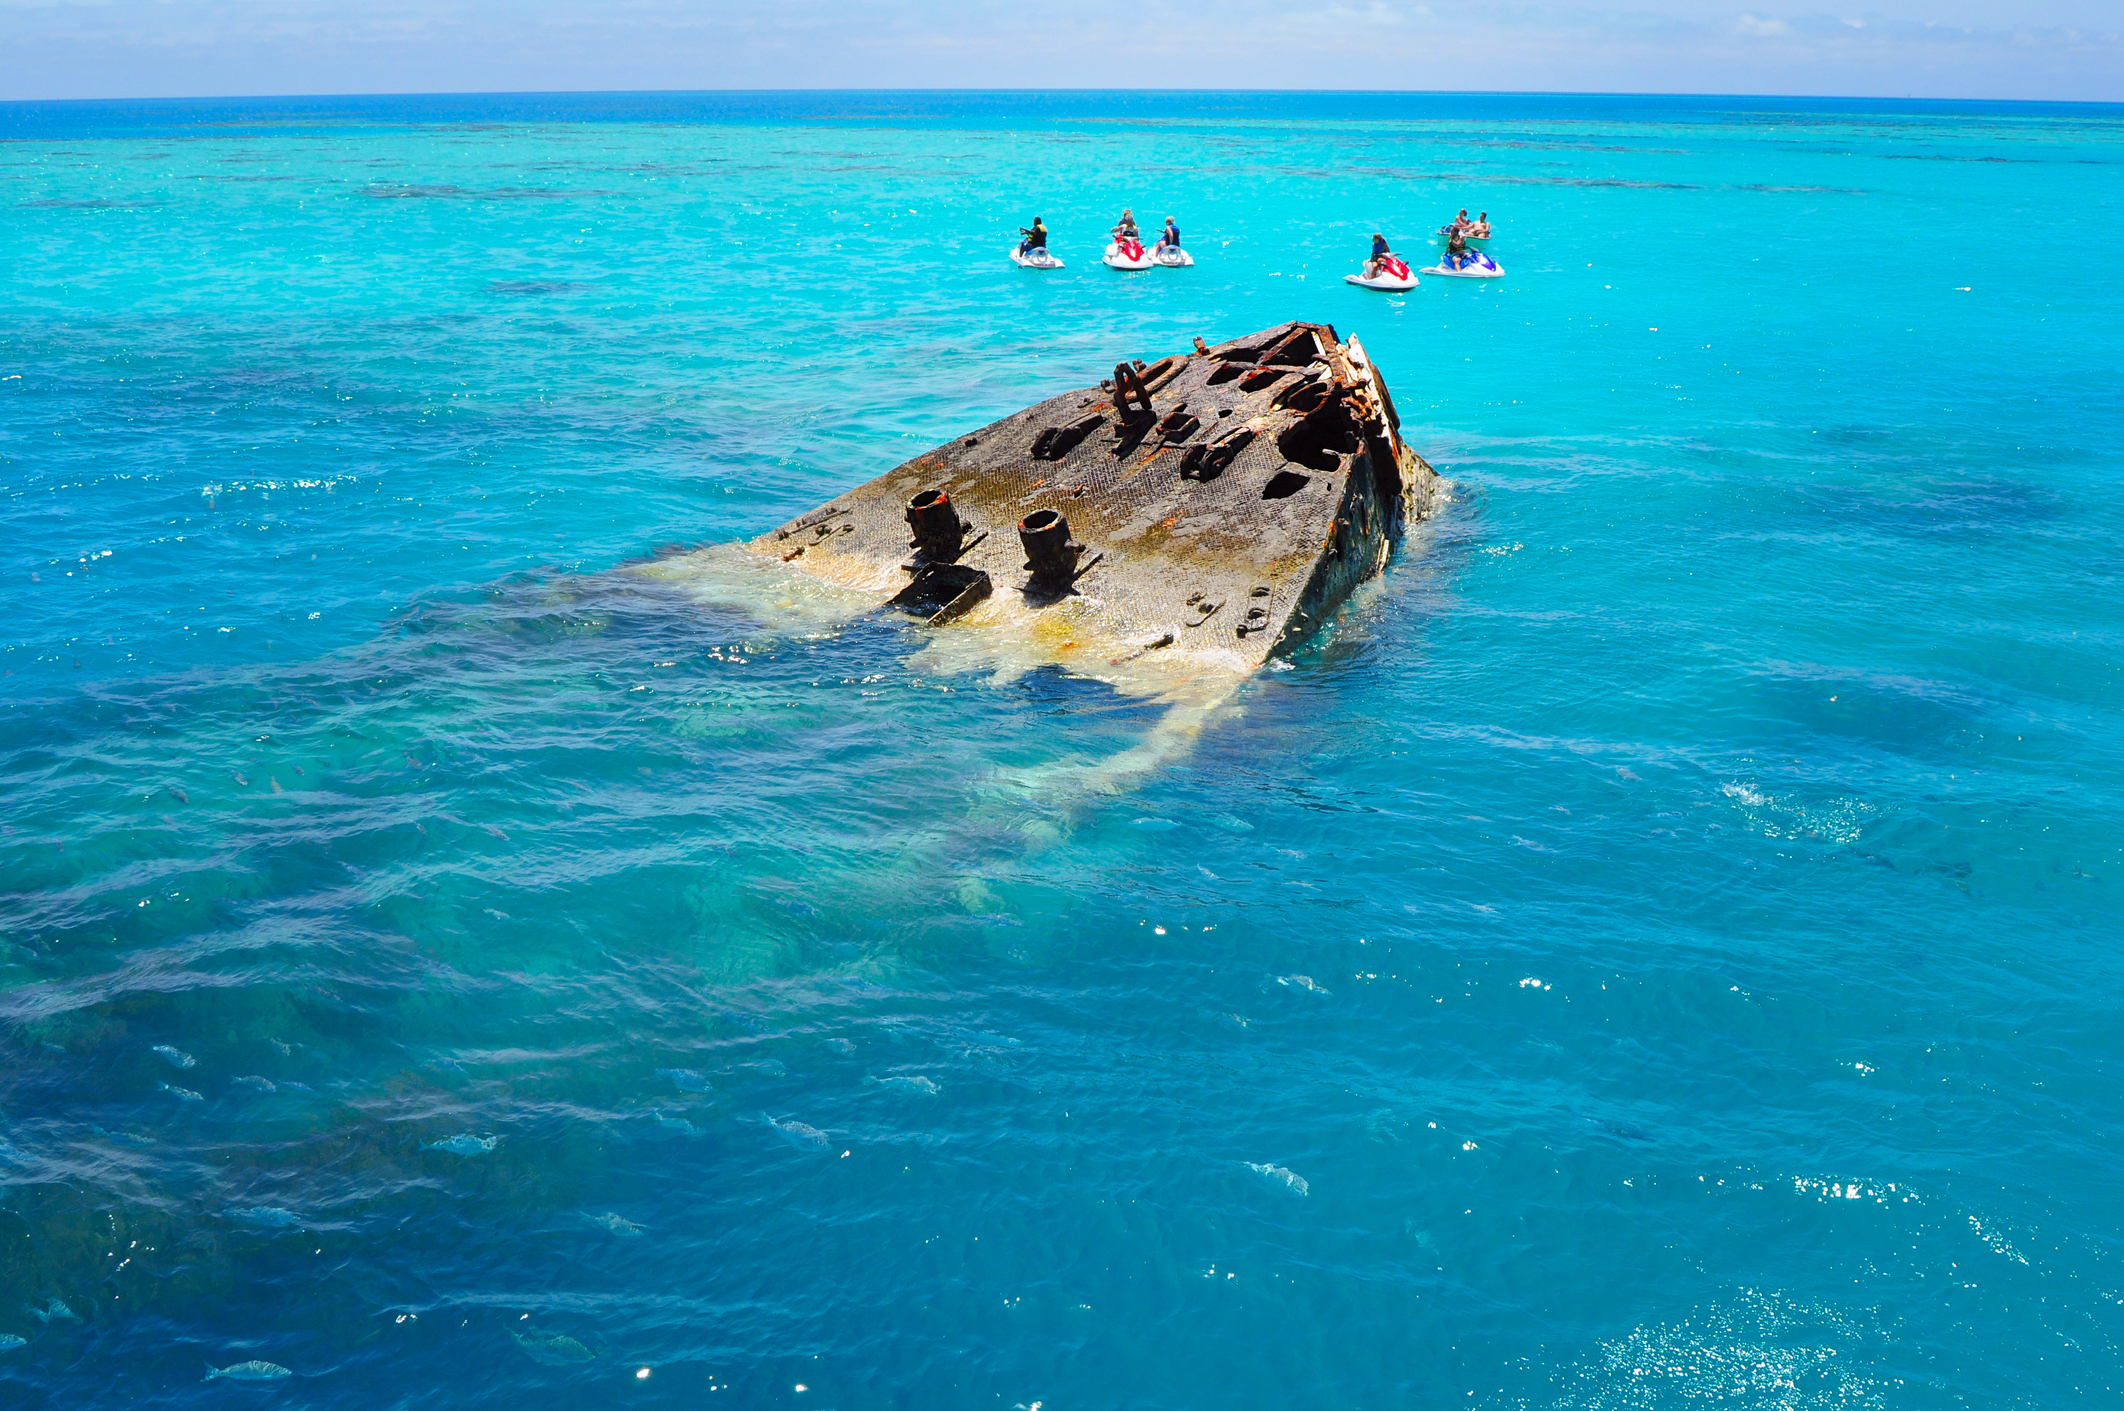 Bermuda island is famous for its shipwrecks